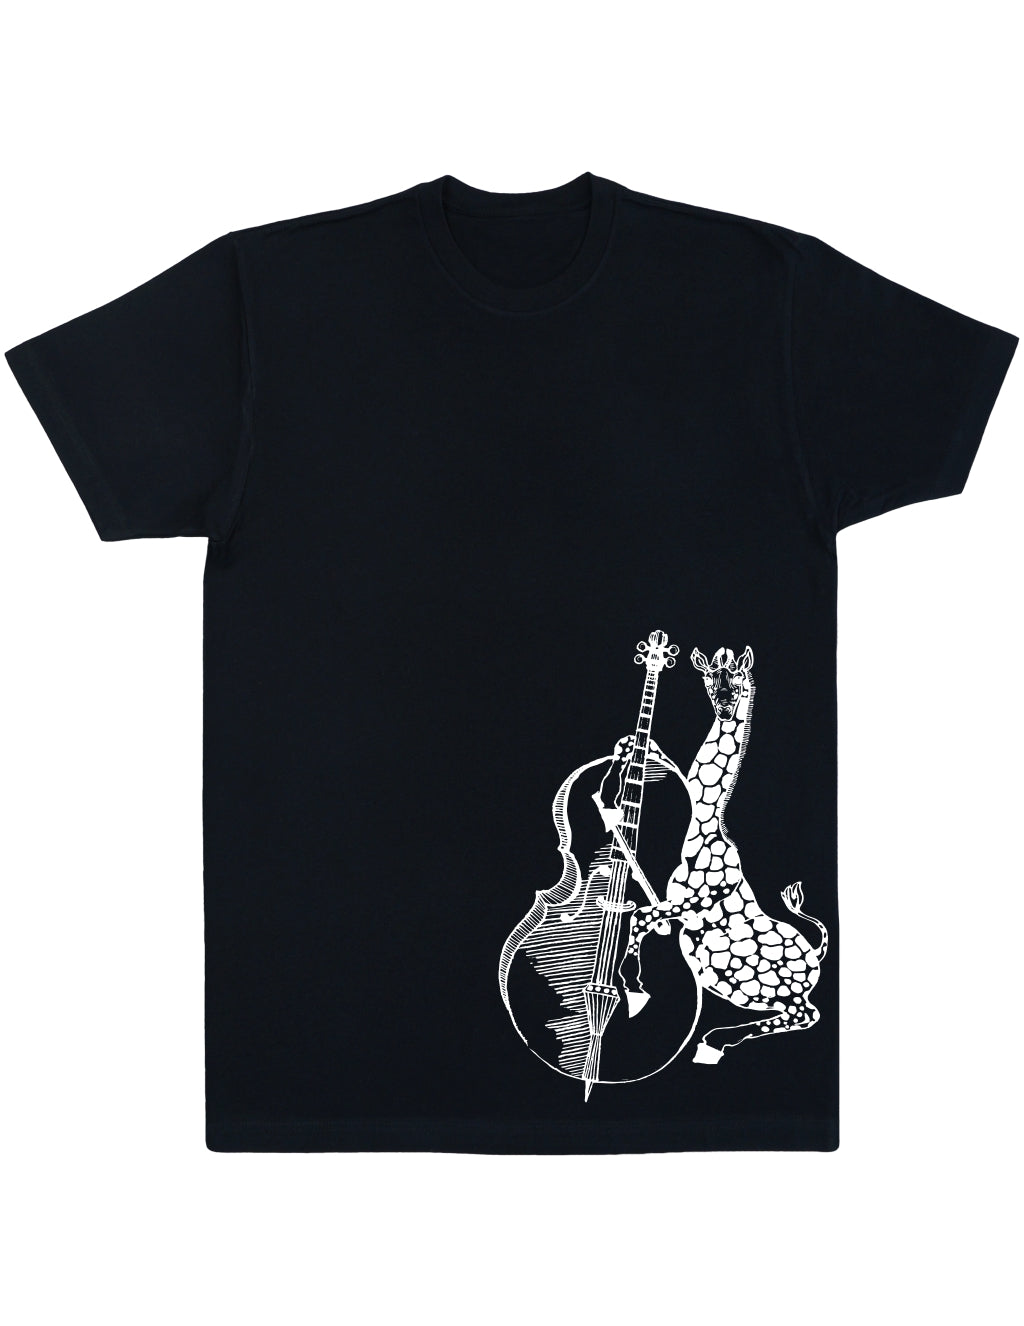 SEEMBO Giraffe Playing Cello Men's Cotton T-Shirt Side Print